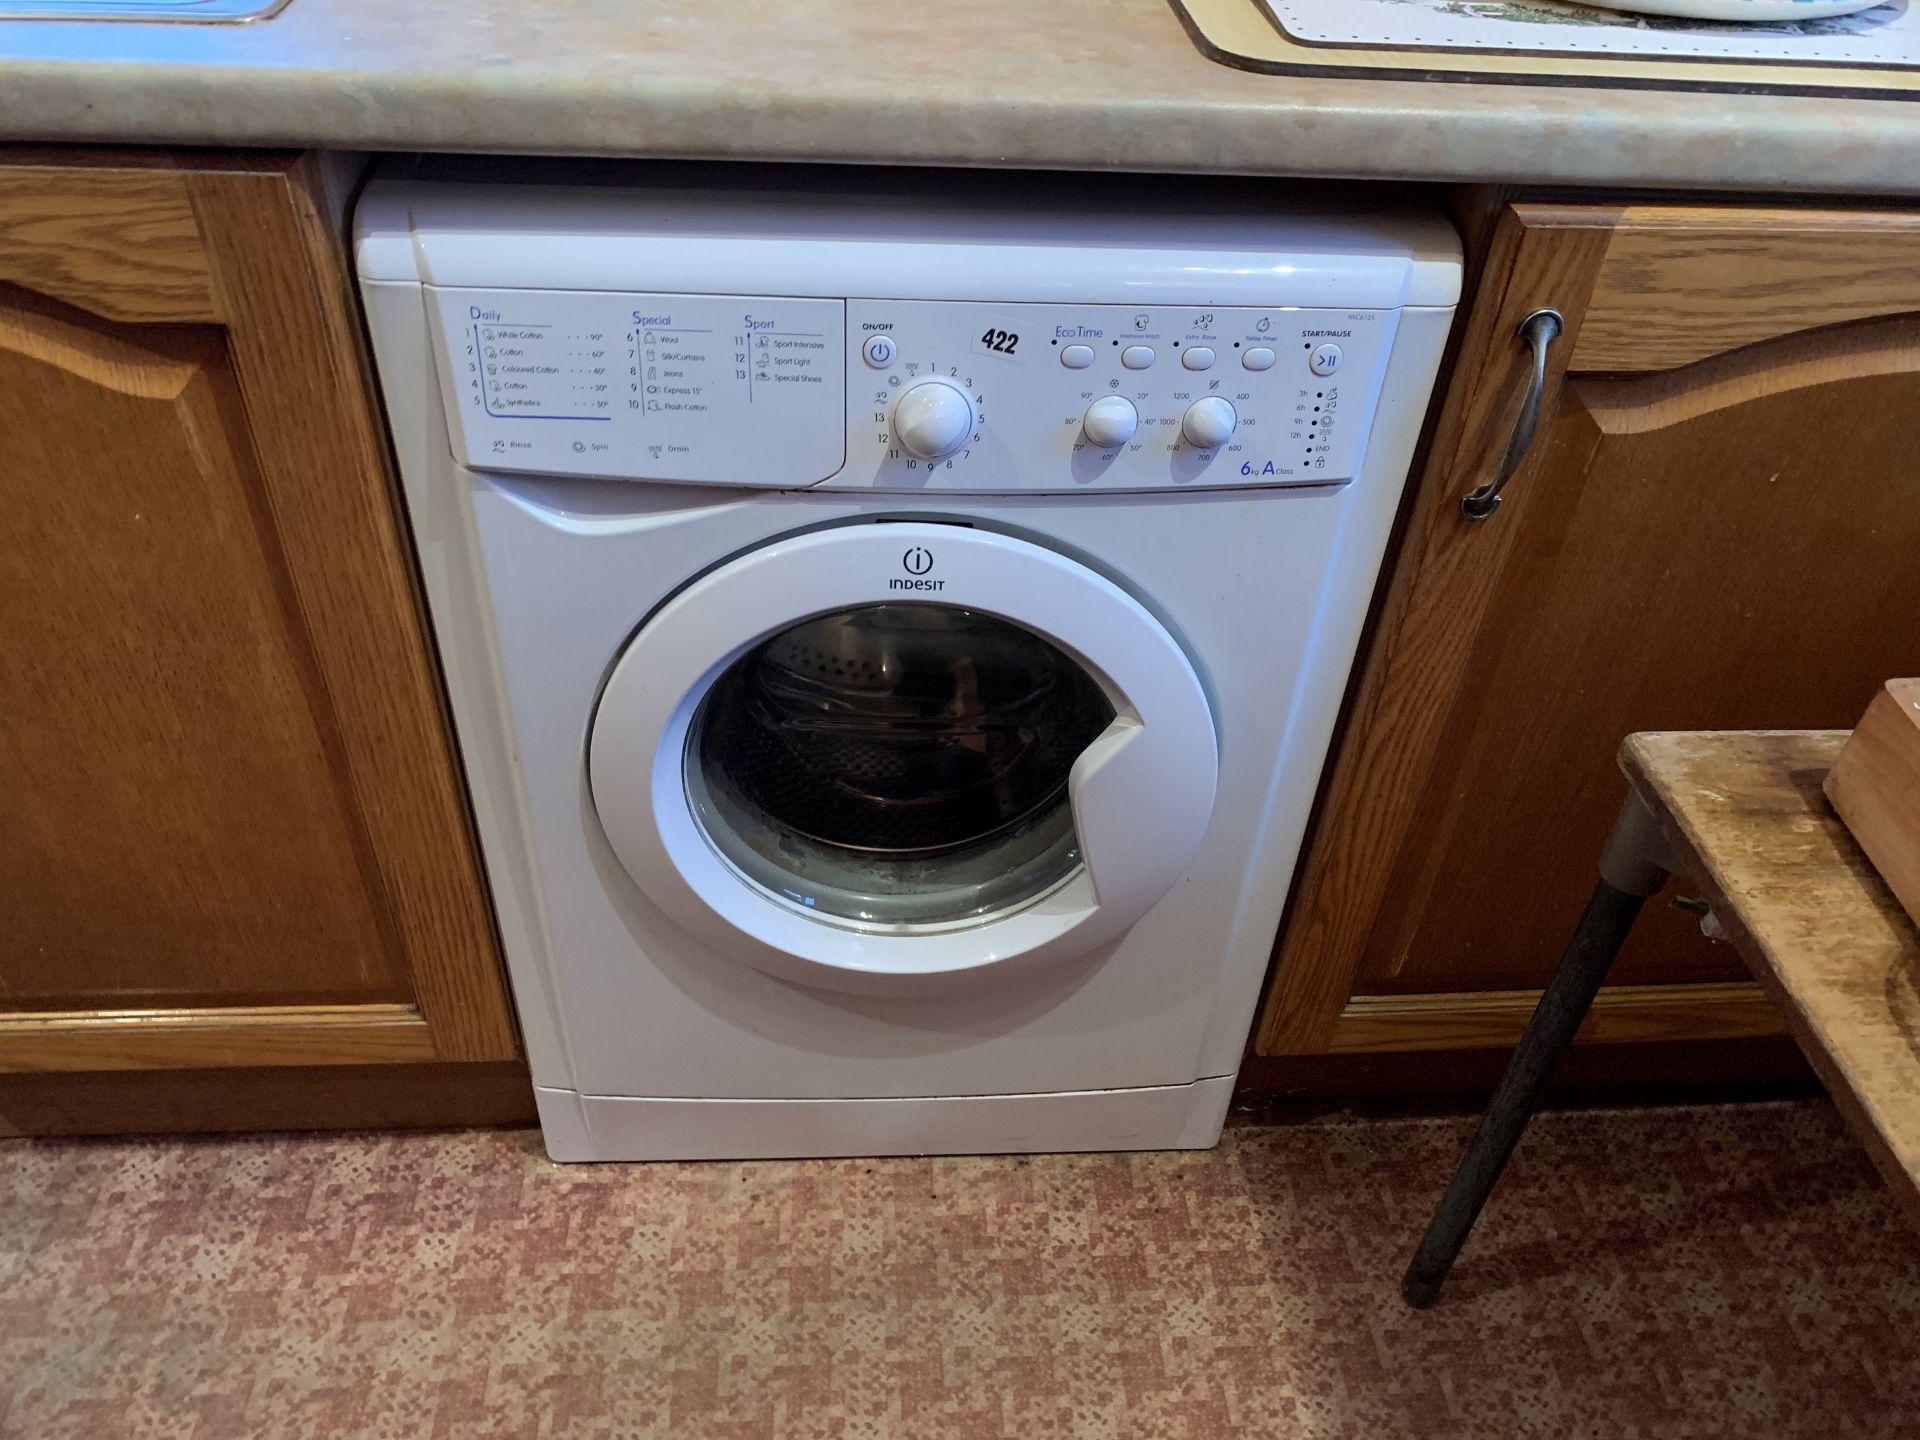 Indesit washing machine - buyer to uninstall